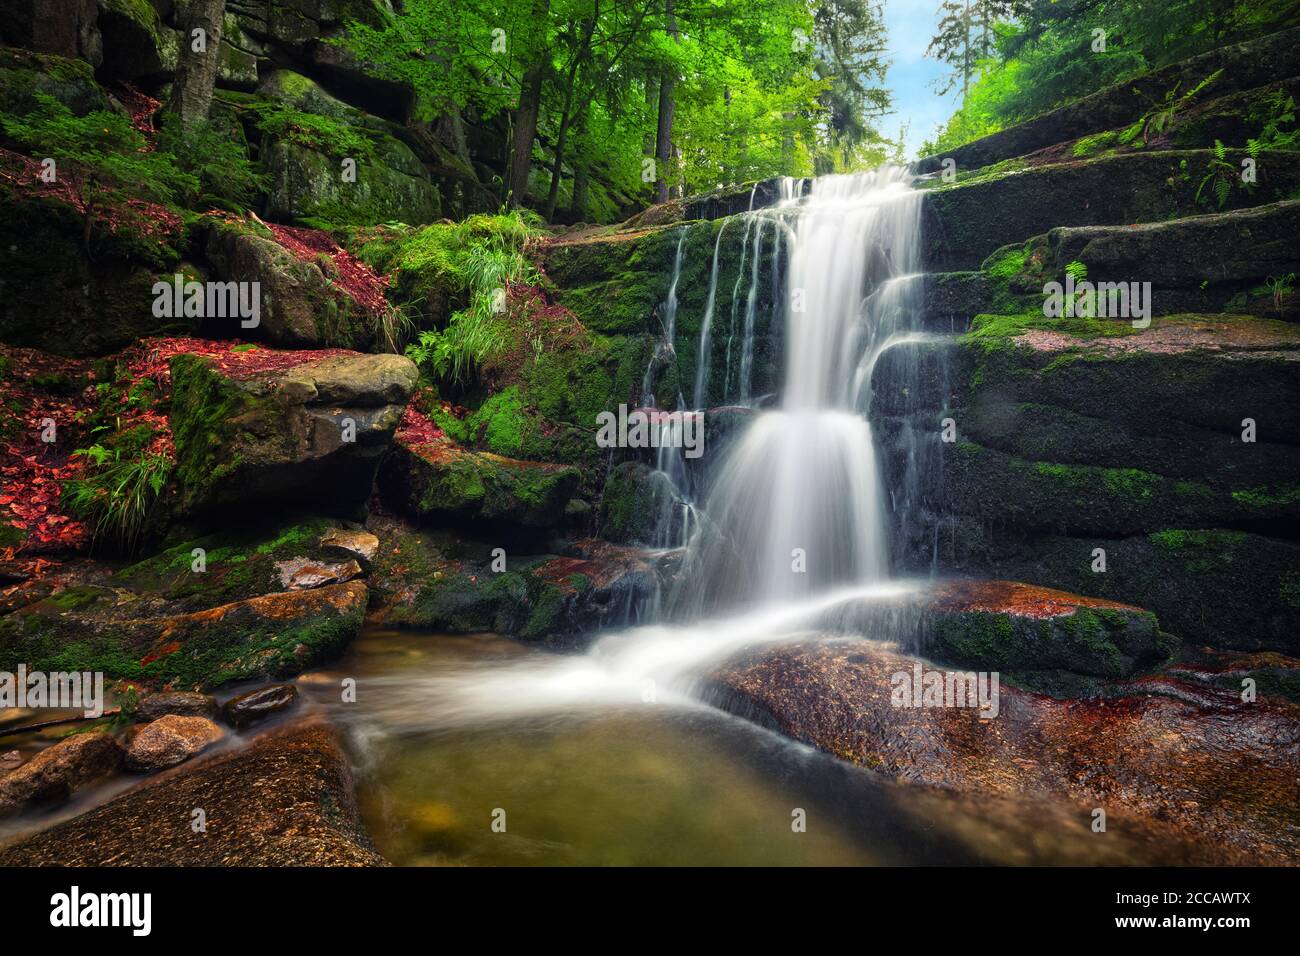 Kaskady Myi Wasserfall im Nationalpark Karkonosze, Niederschlesien, Polen Stockfoto